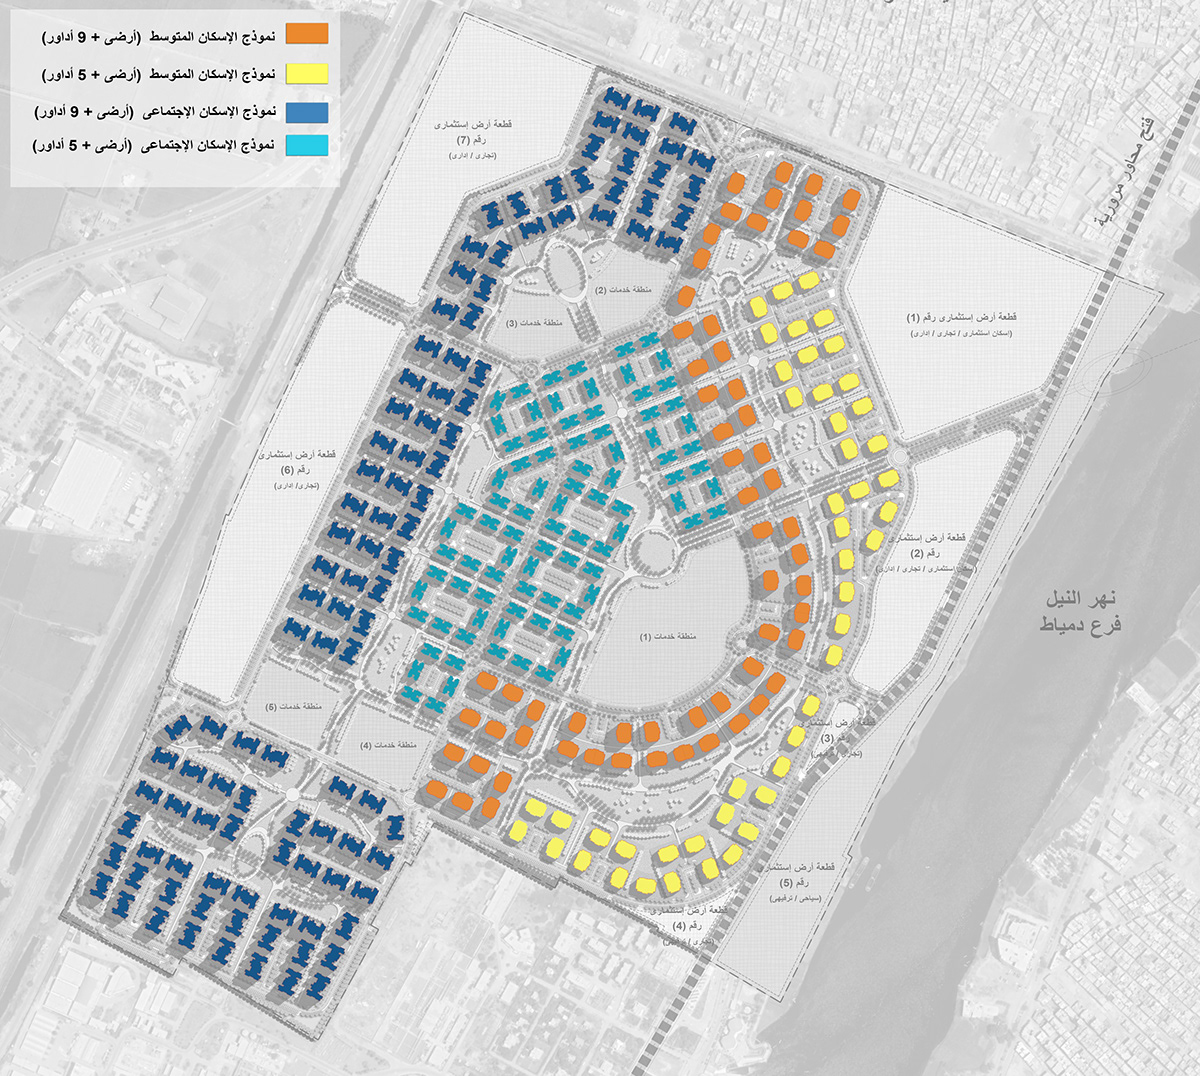 compound Gated Communities housing Landscape Landscape Architecture  Master Plan Mixed Use Development residential Urban Design urban planning